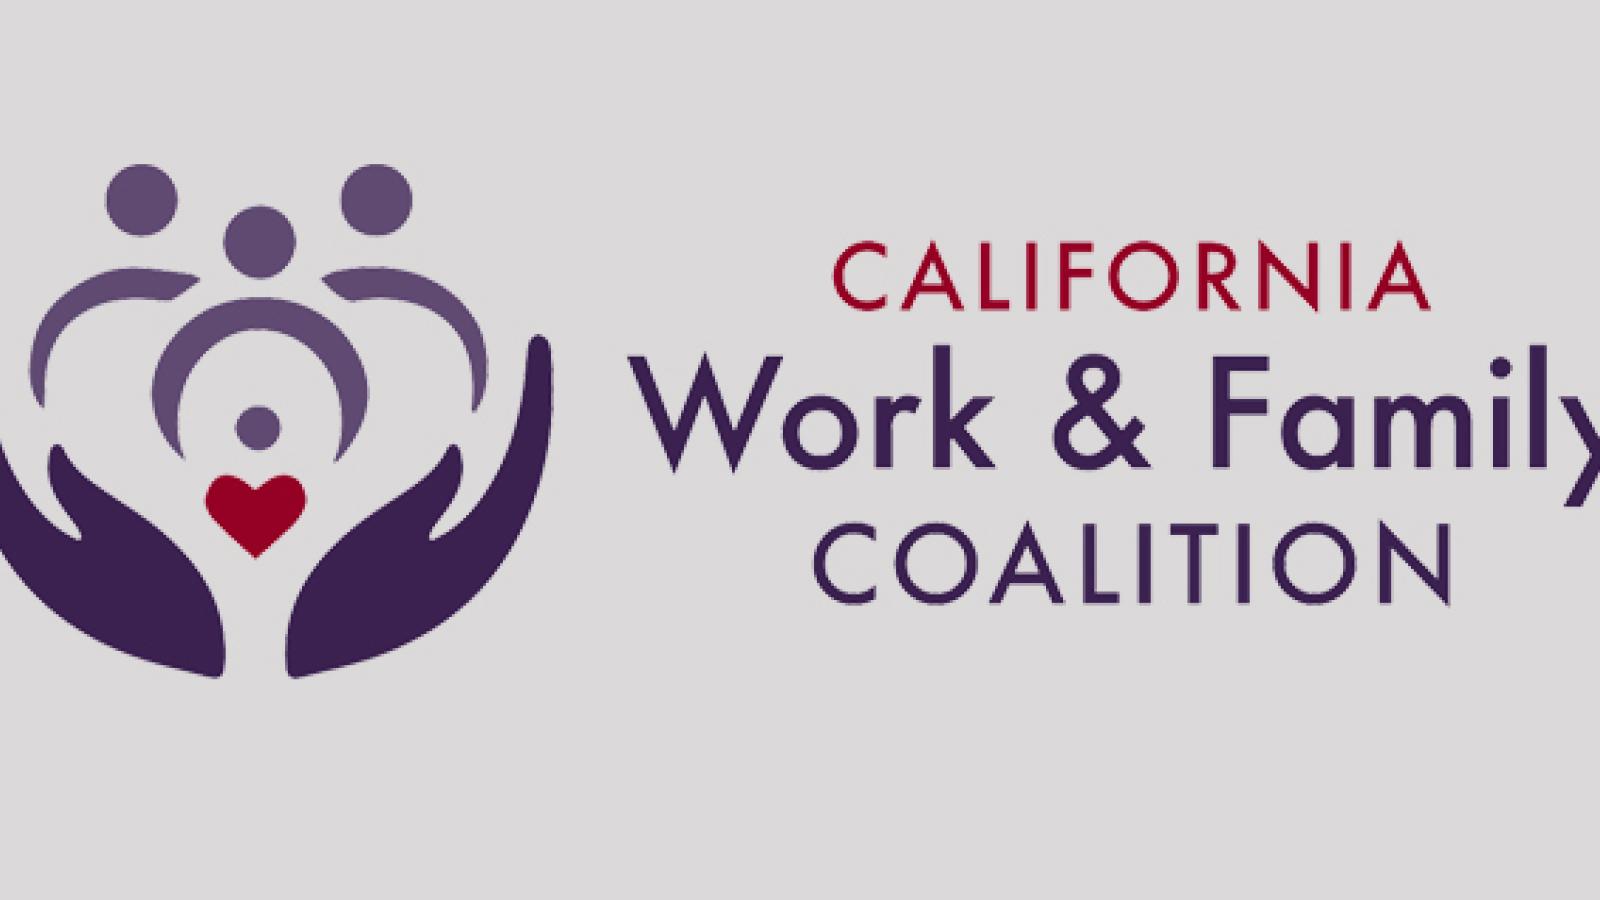 Banner of California Coalition